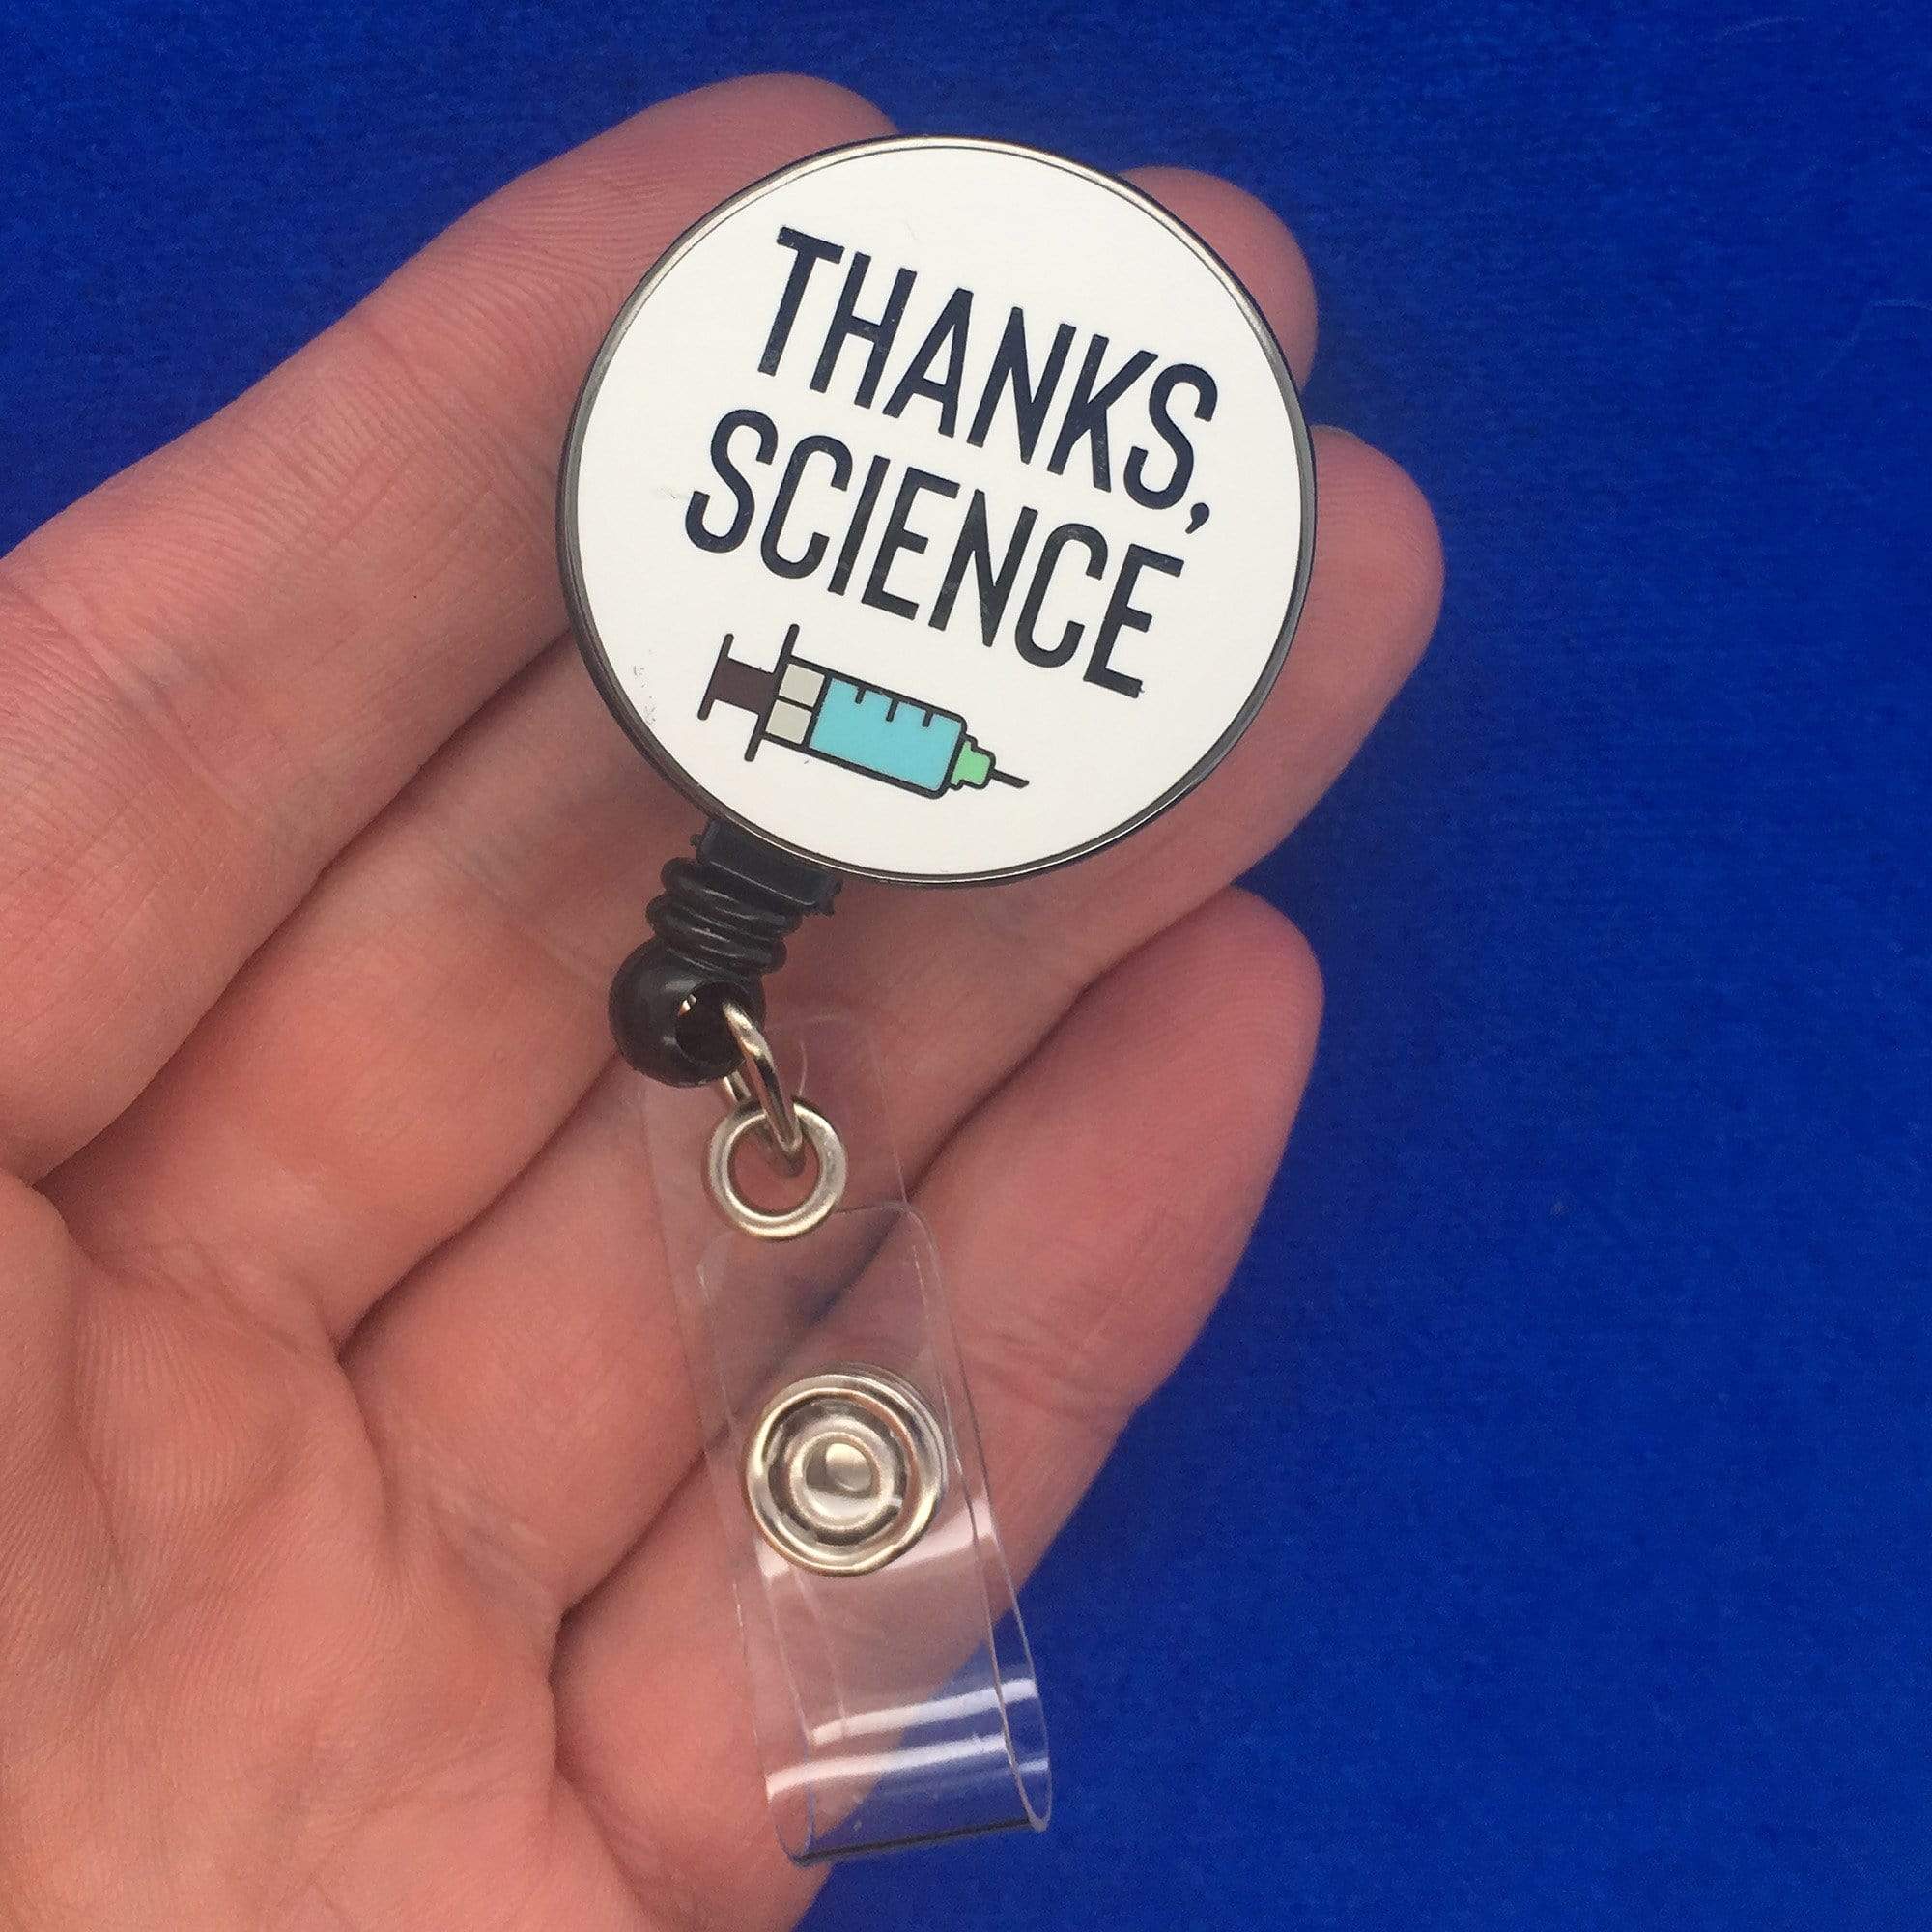 Thanks, Science Badge Reel